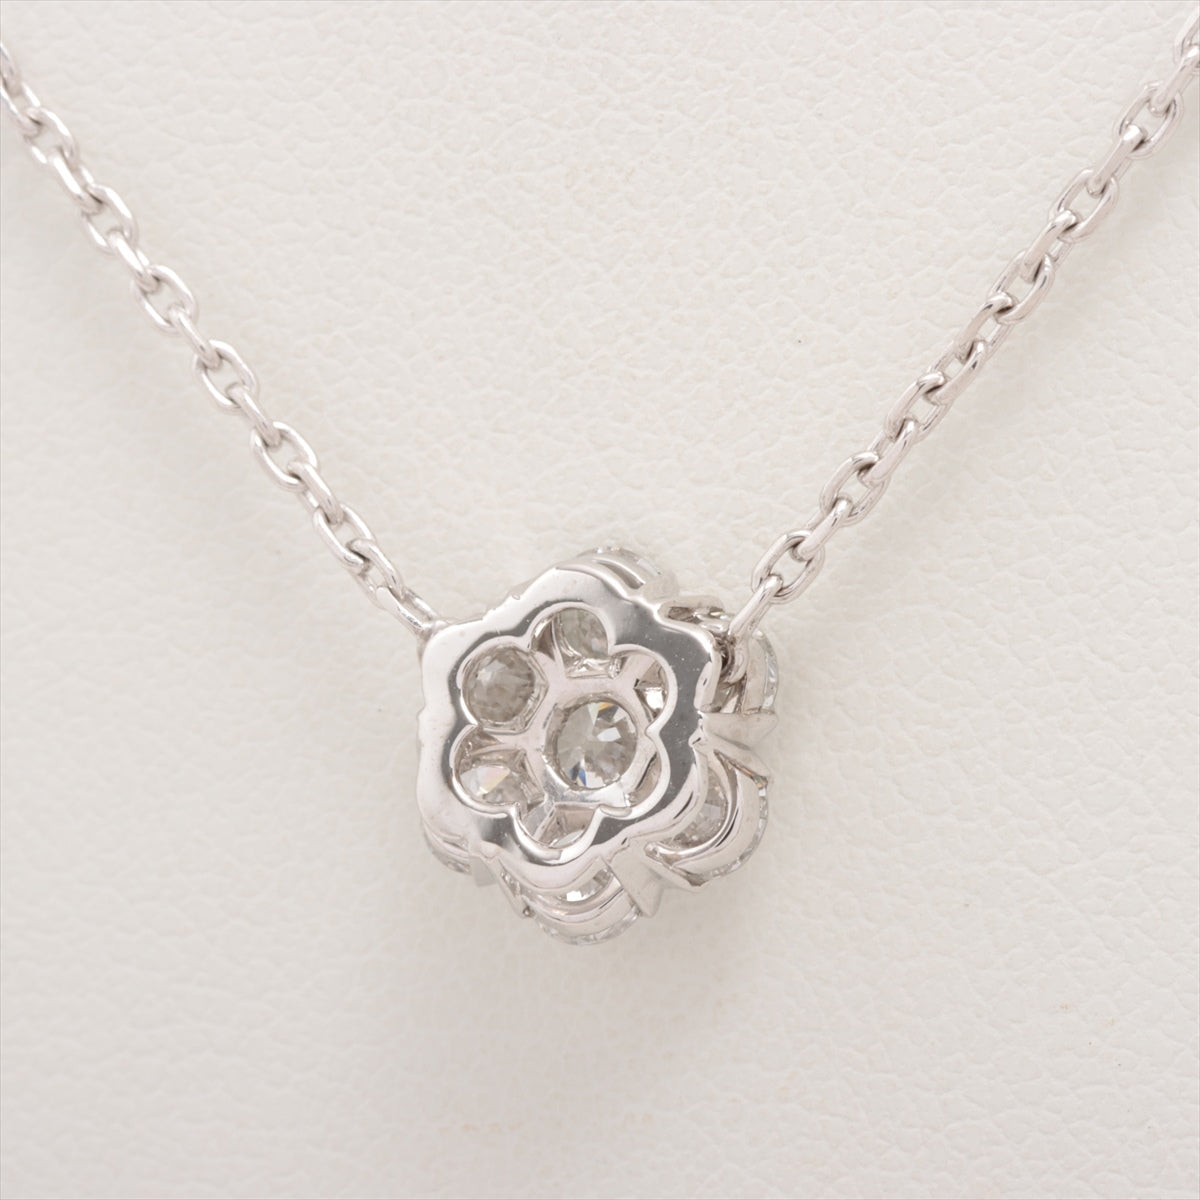 Van Cleef & Arpels Fleurette Small Diamond Necklace 750(WG) 4.7g